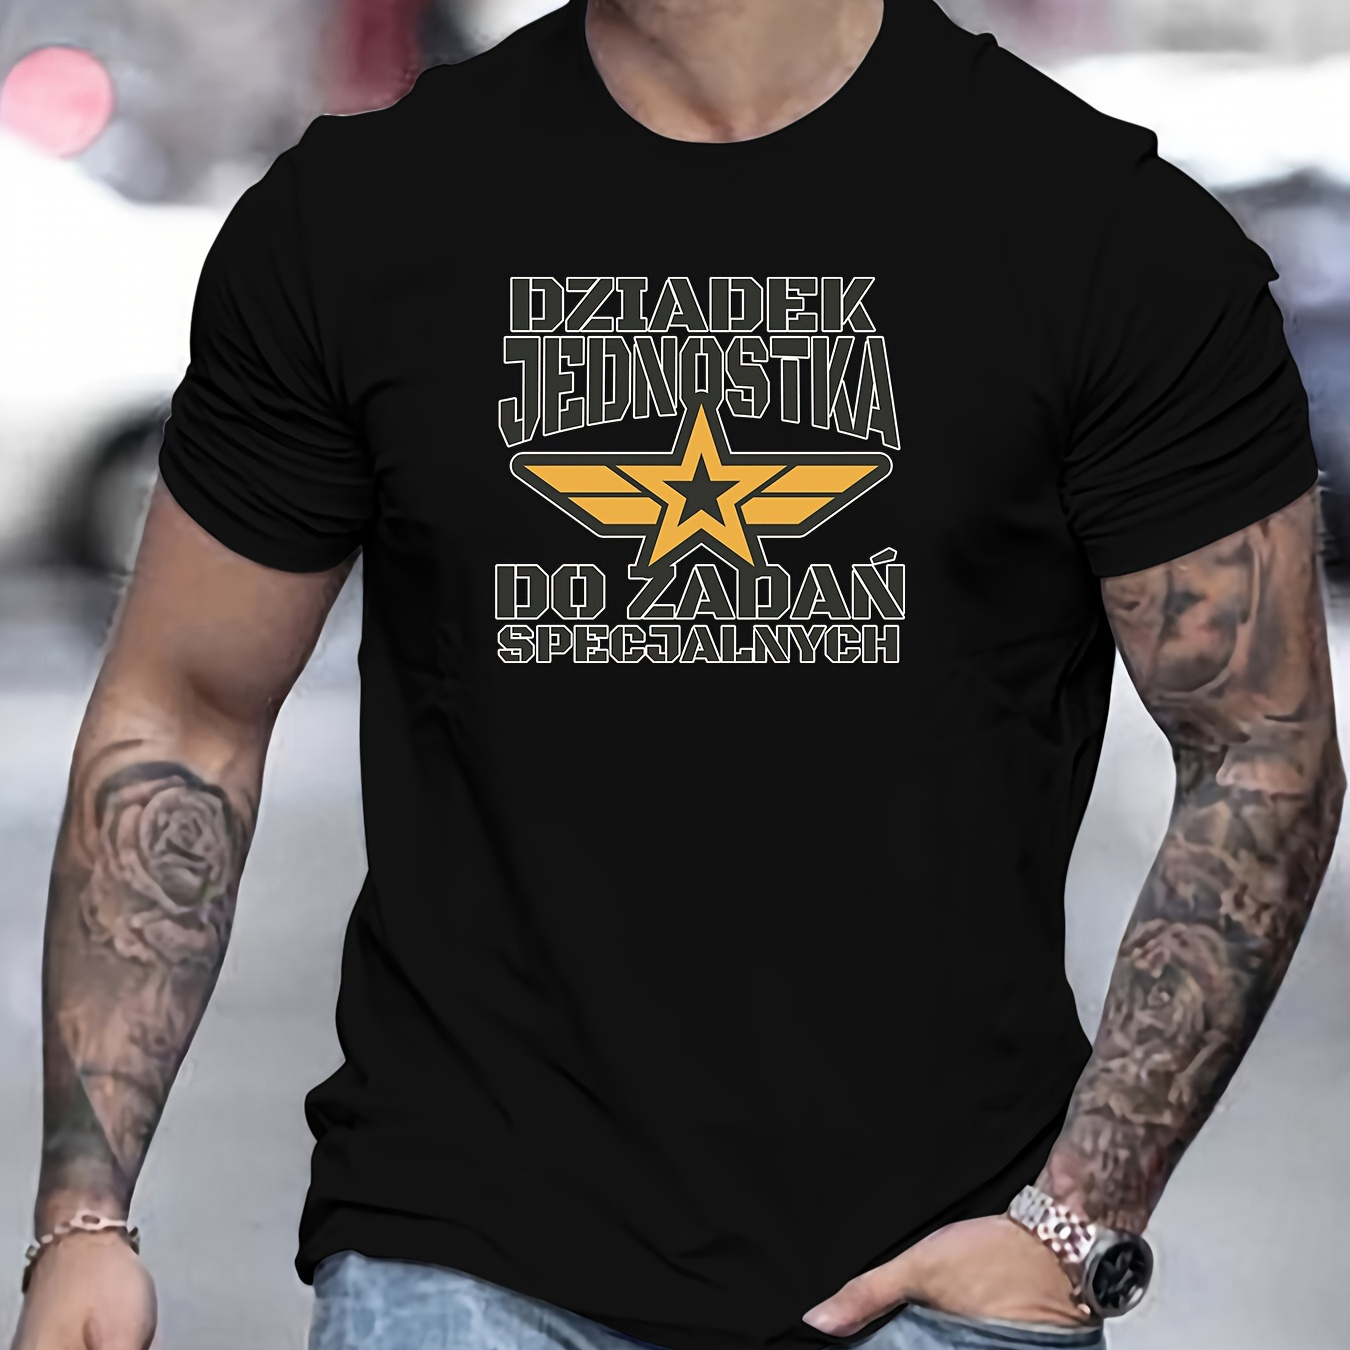 

Polish Grandpa Unit... Print Tee Shirt, Tees For Men, Casual Short Sleeve T-shirt For Summer